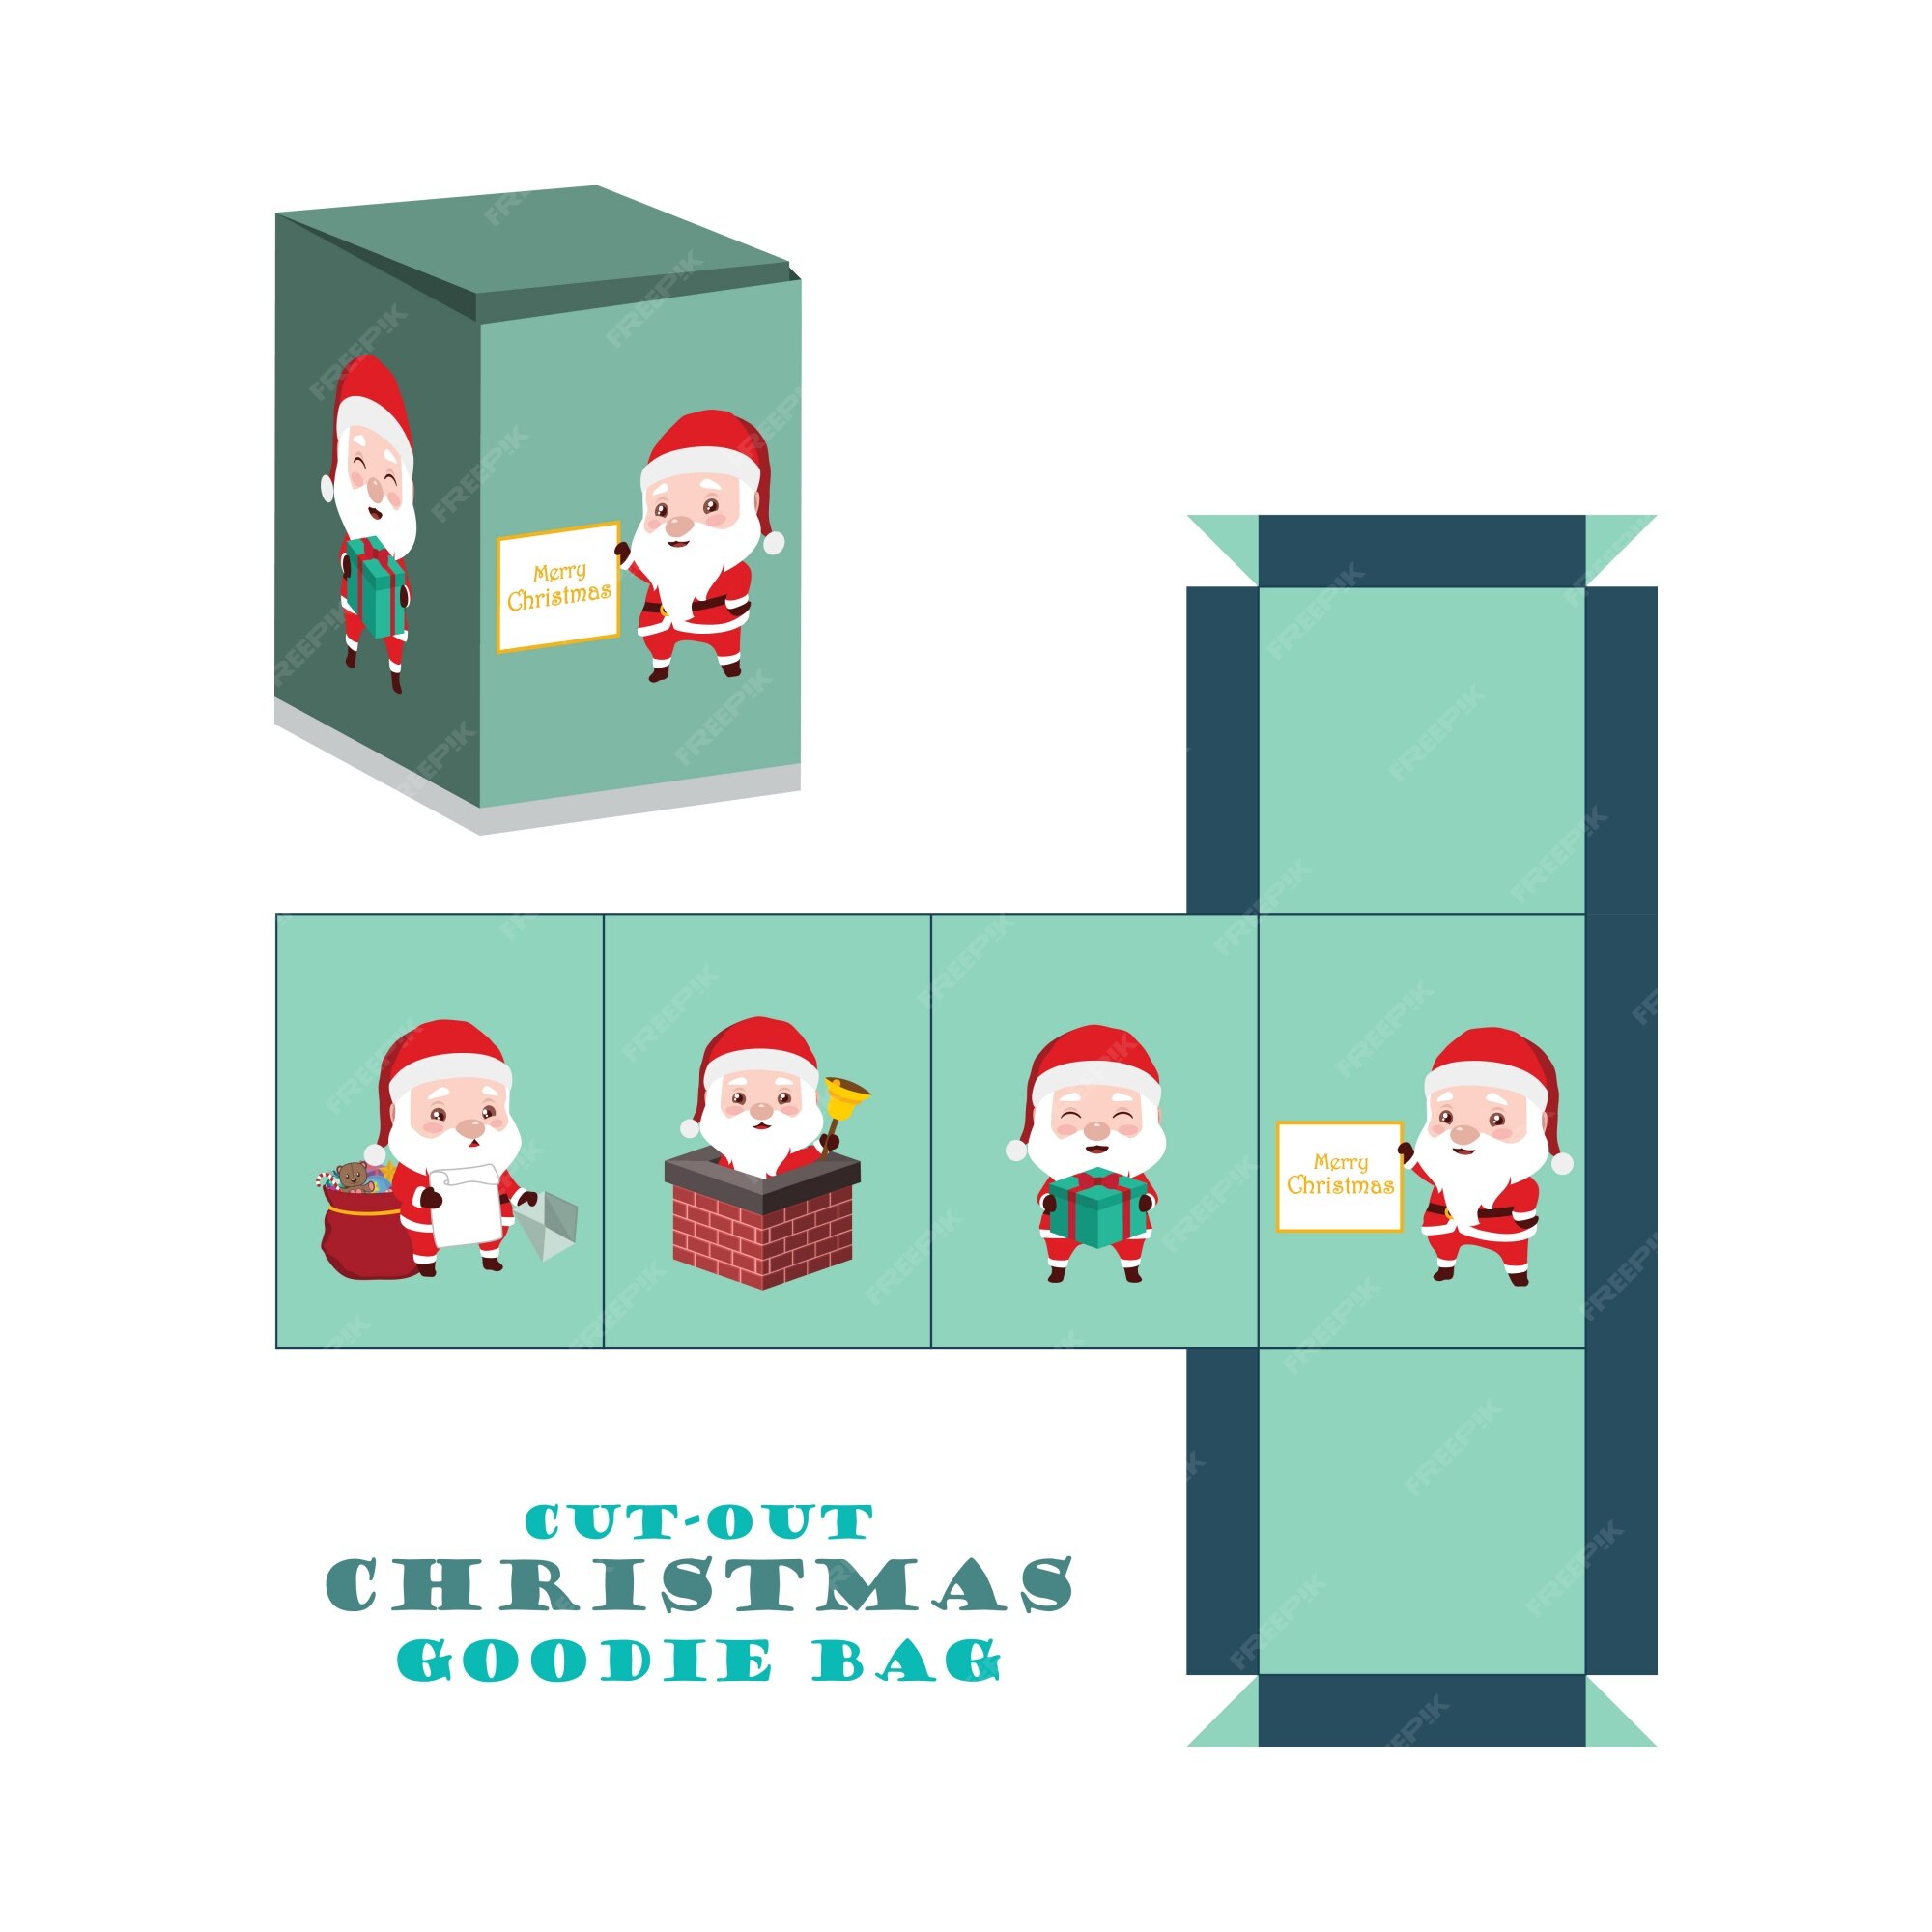 Premium Vector | Christmas goodie bag cut-out box with santa